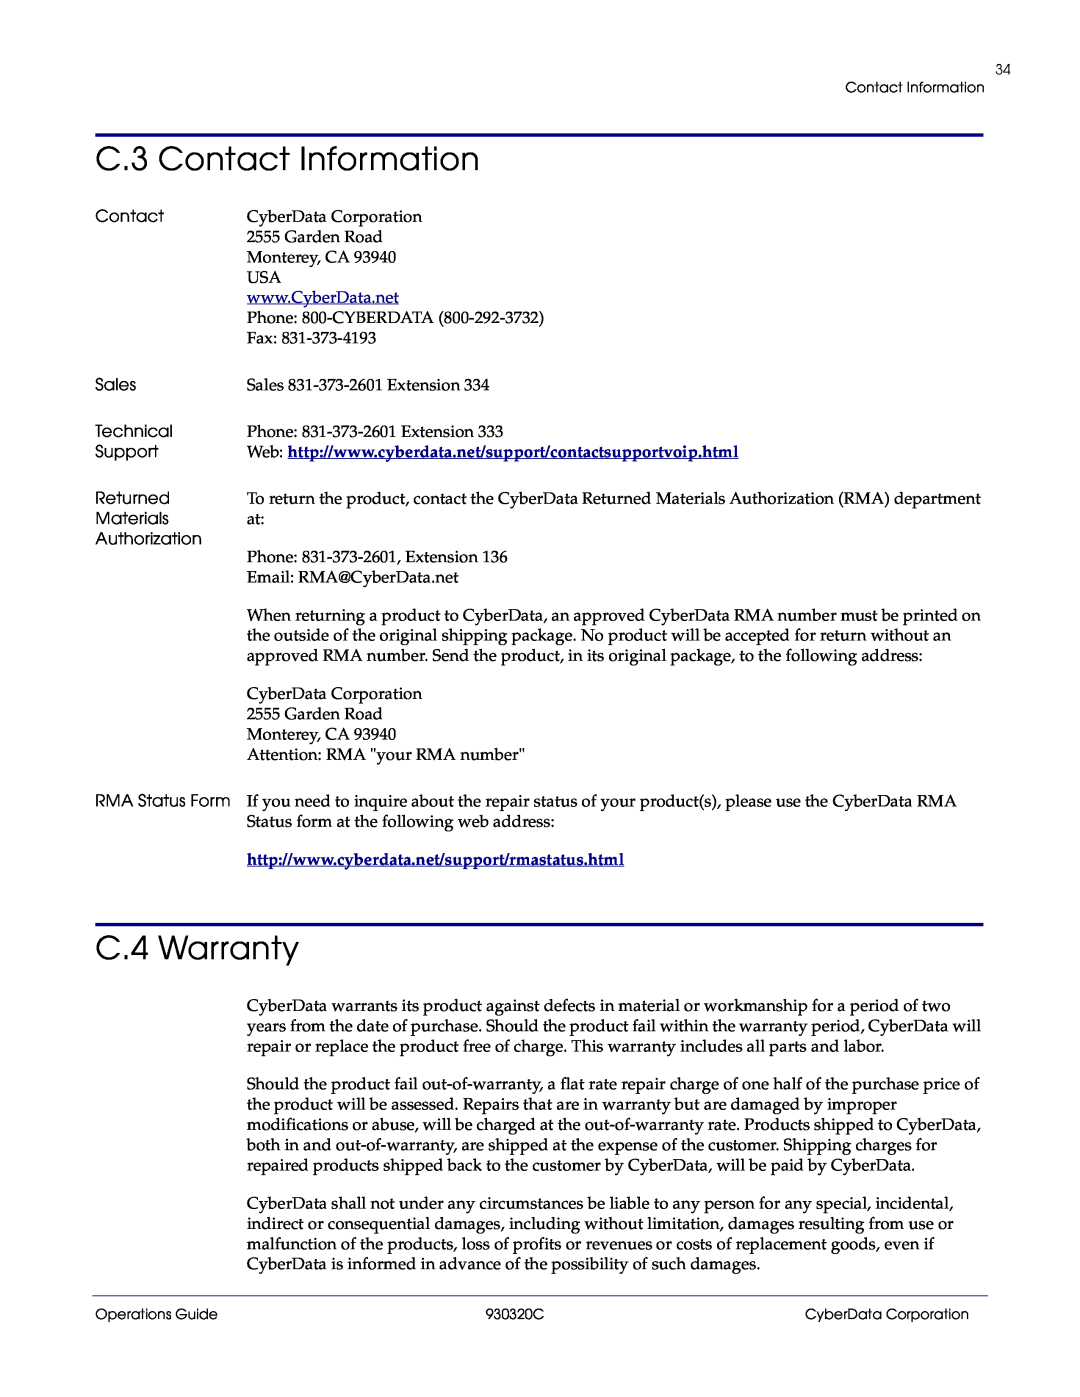 CyberData 11103 manual C.3 Contact Information, C.4 Warranty 